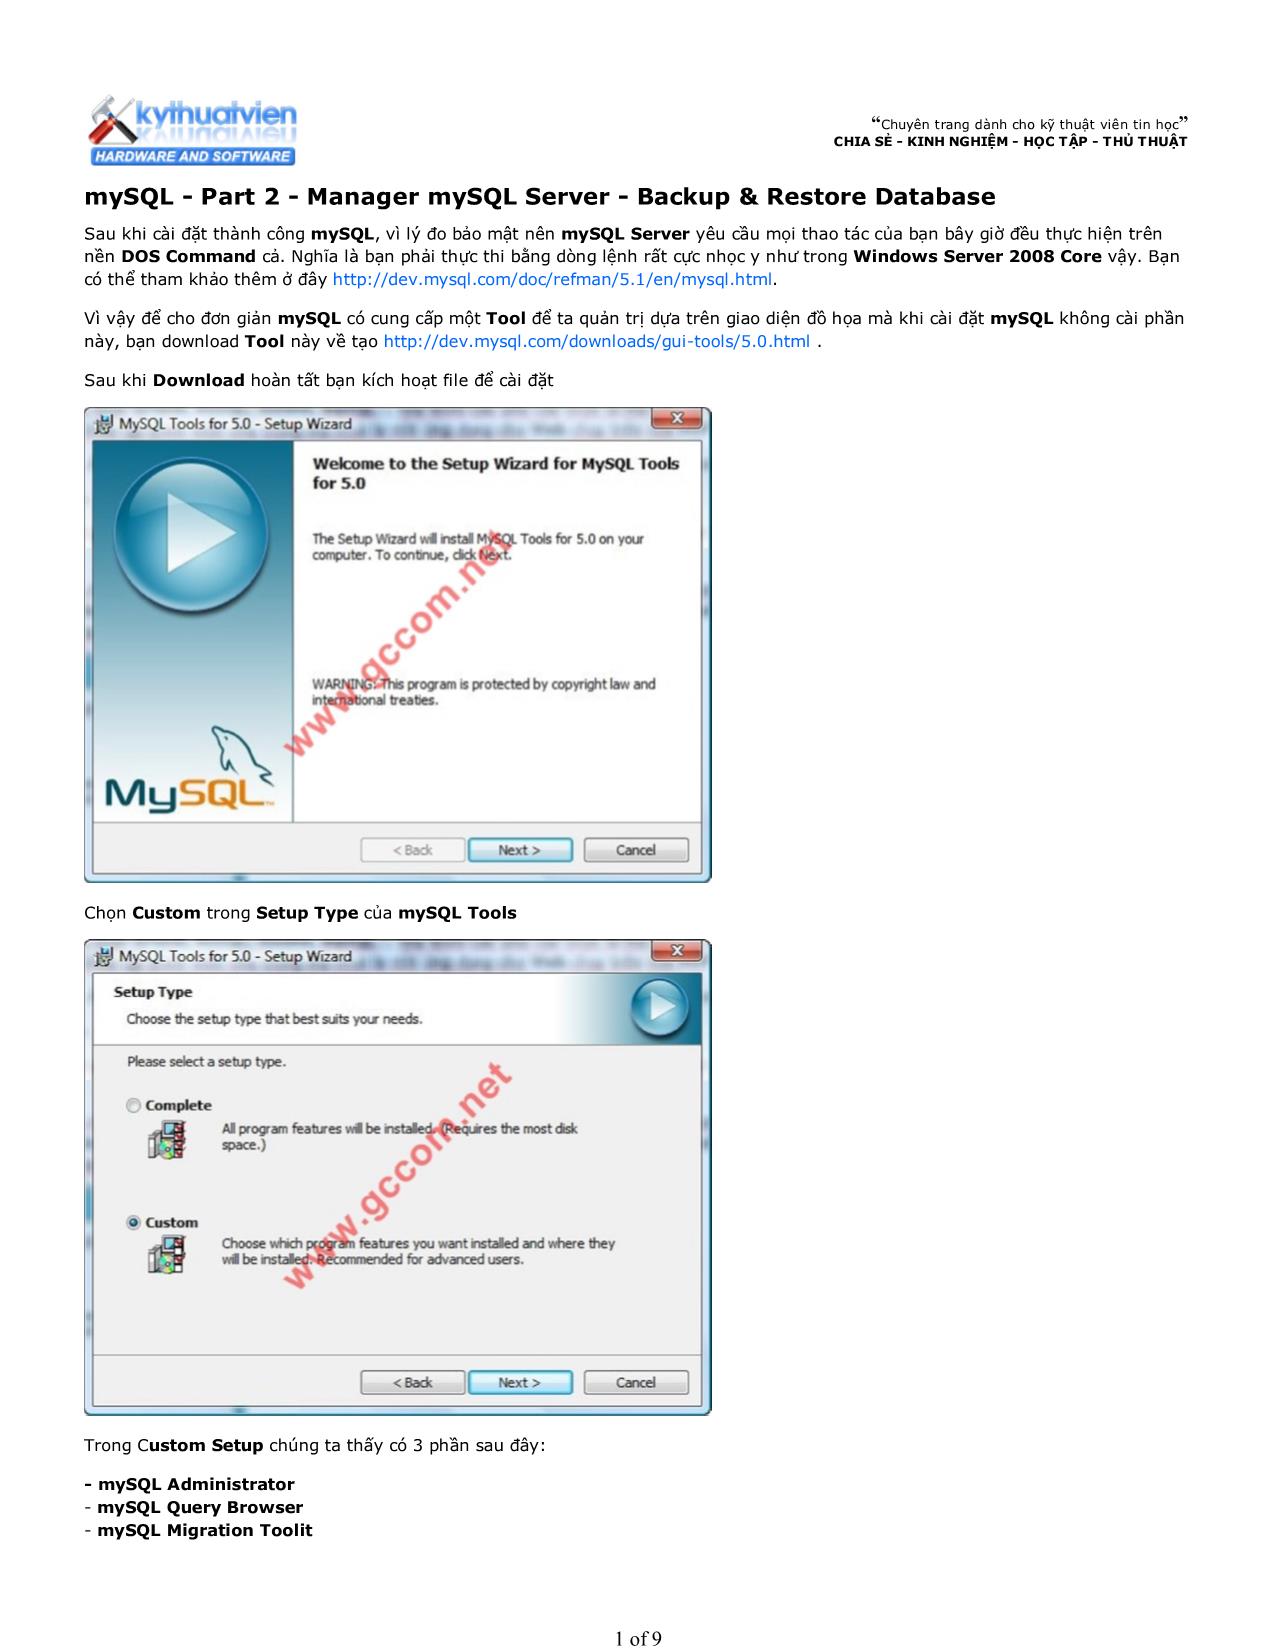 MySQL - Part 2: Manager mySQL Server - Backup & Restore Database trang 1